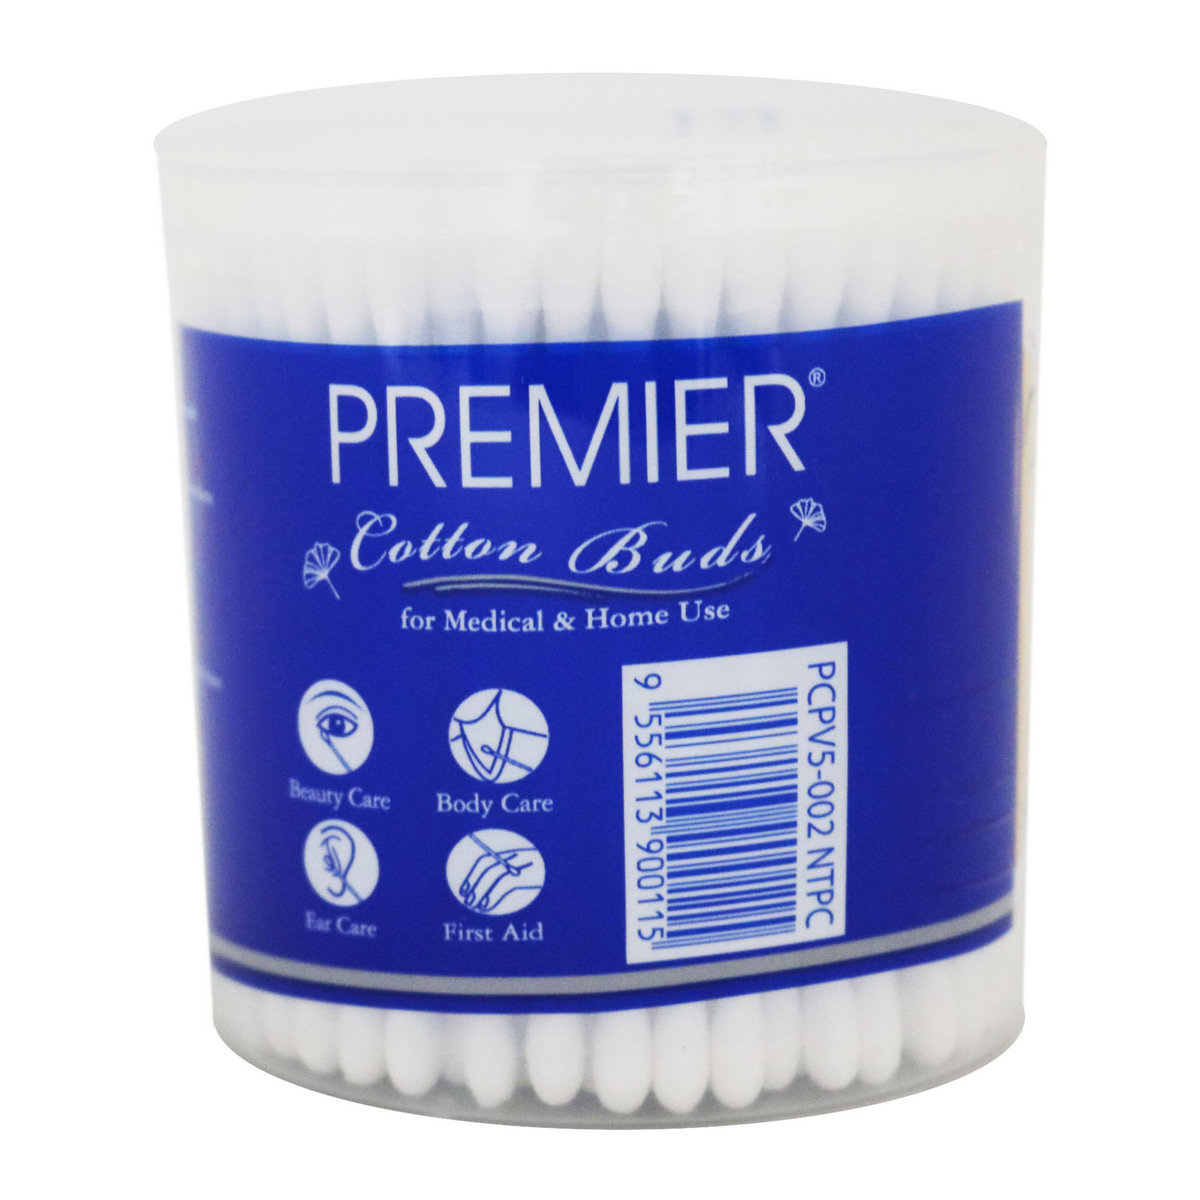 Premier Cotton Buds 400 Tips Online at Best Price | Cotton Buds | Lulu ...